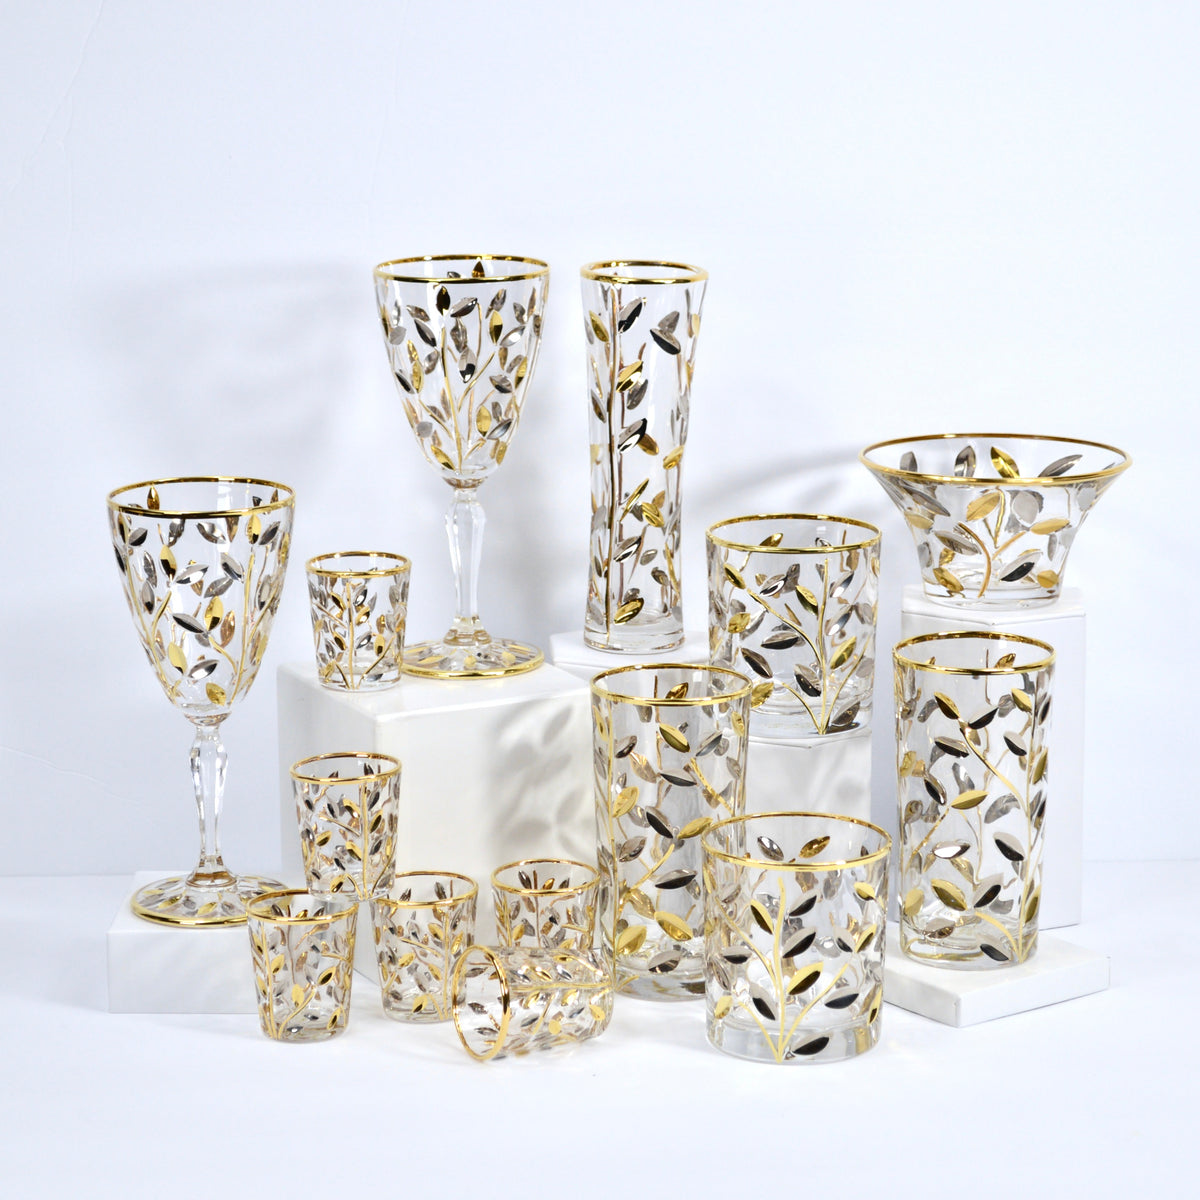 Flowervine Platinum and Gold Italian Crystal Tall Drink Glasses, Set of 2 - My Italian Decor